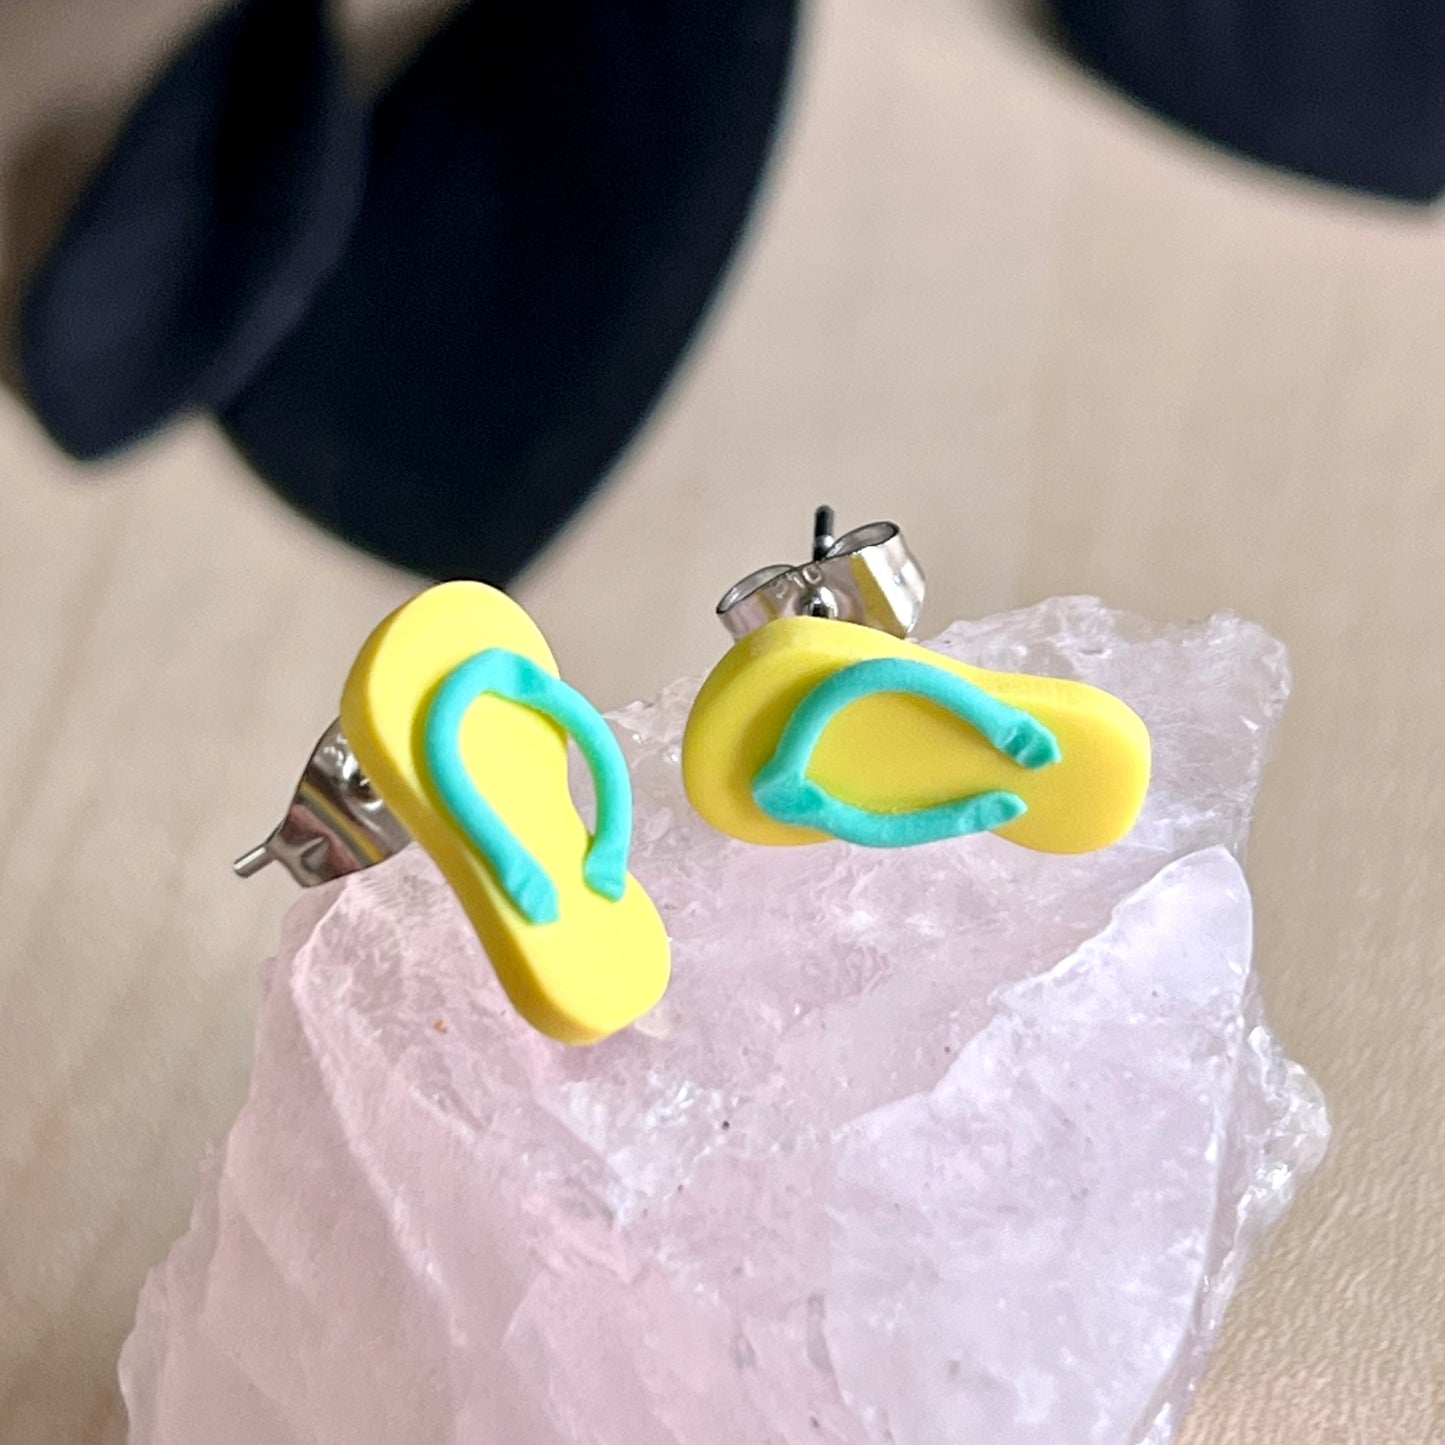 Thongs / flip flops studs, lemon yellow with Fiji blue, handmade earrings